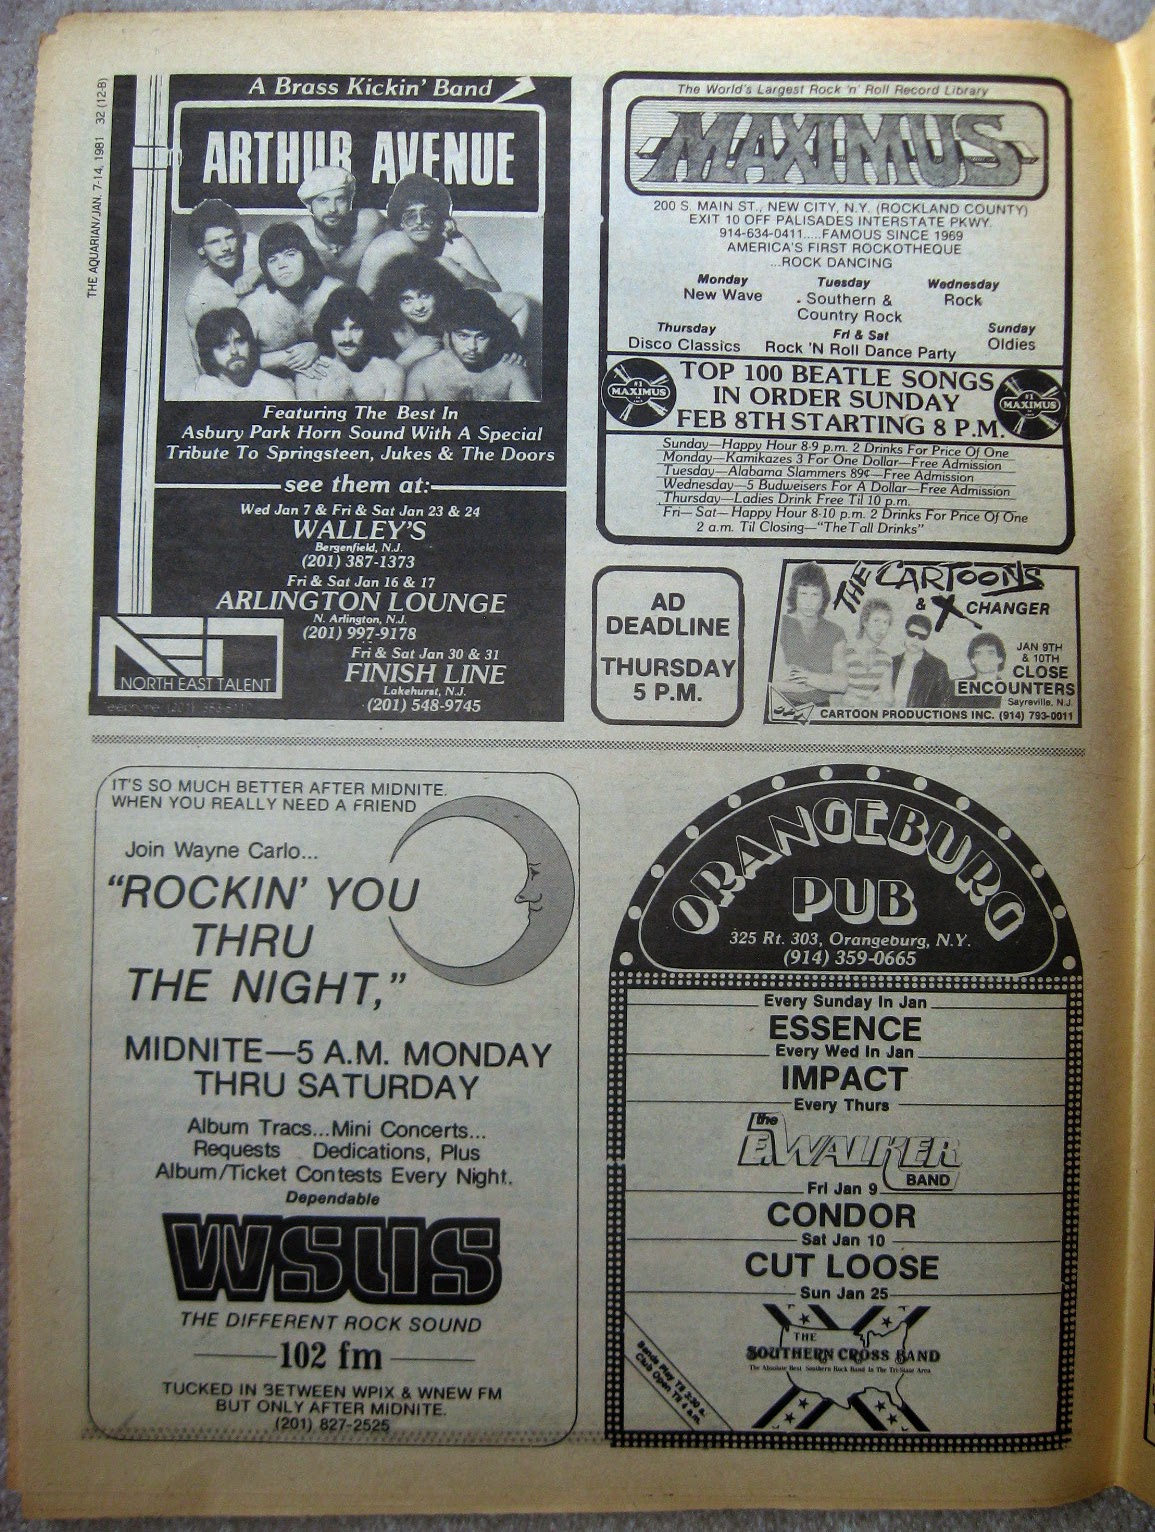 Maximus - Orangeburg Pub - Close Encounters band line ups January 1981